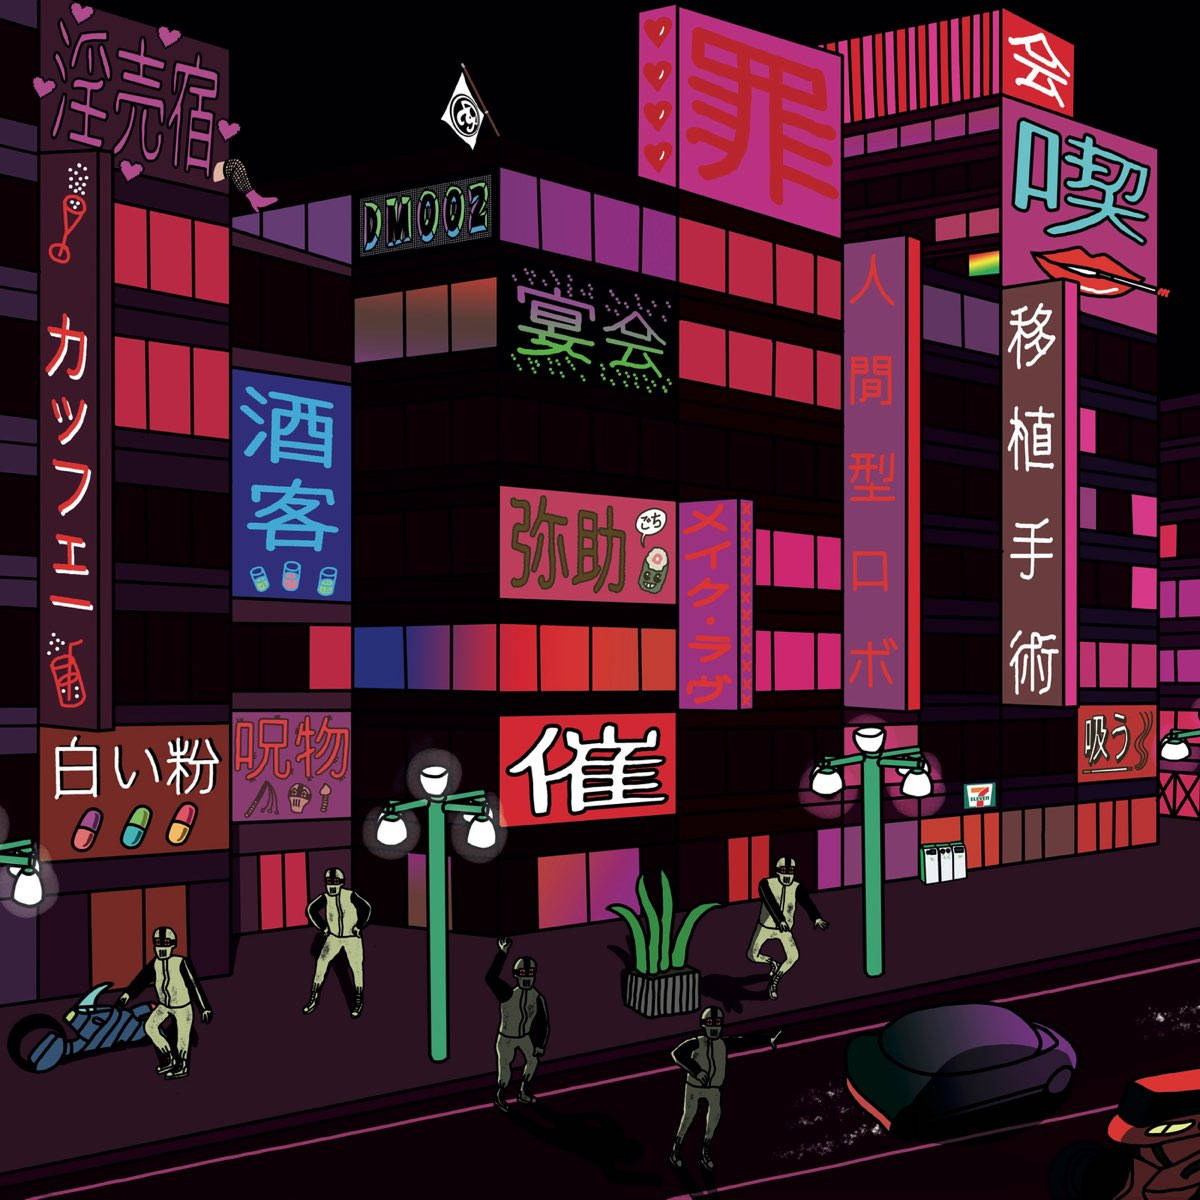 Retro Japan: An 8-bit Pixel Art Scenery Wallpaper